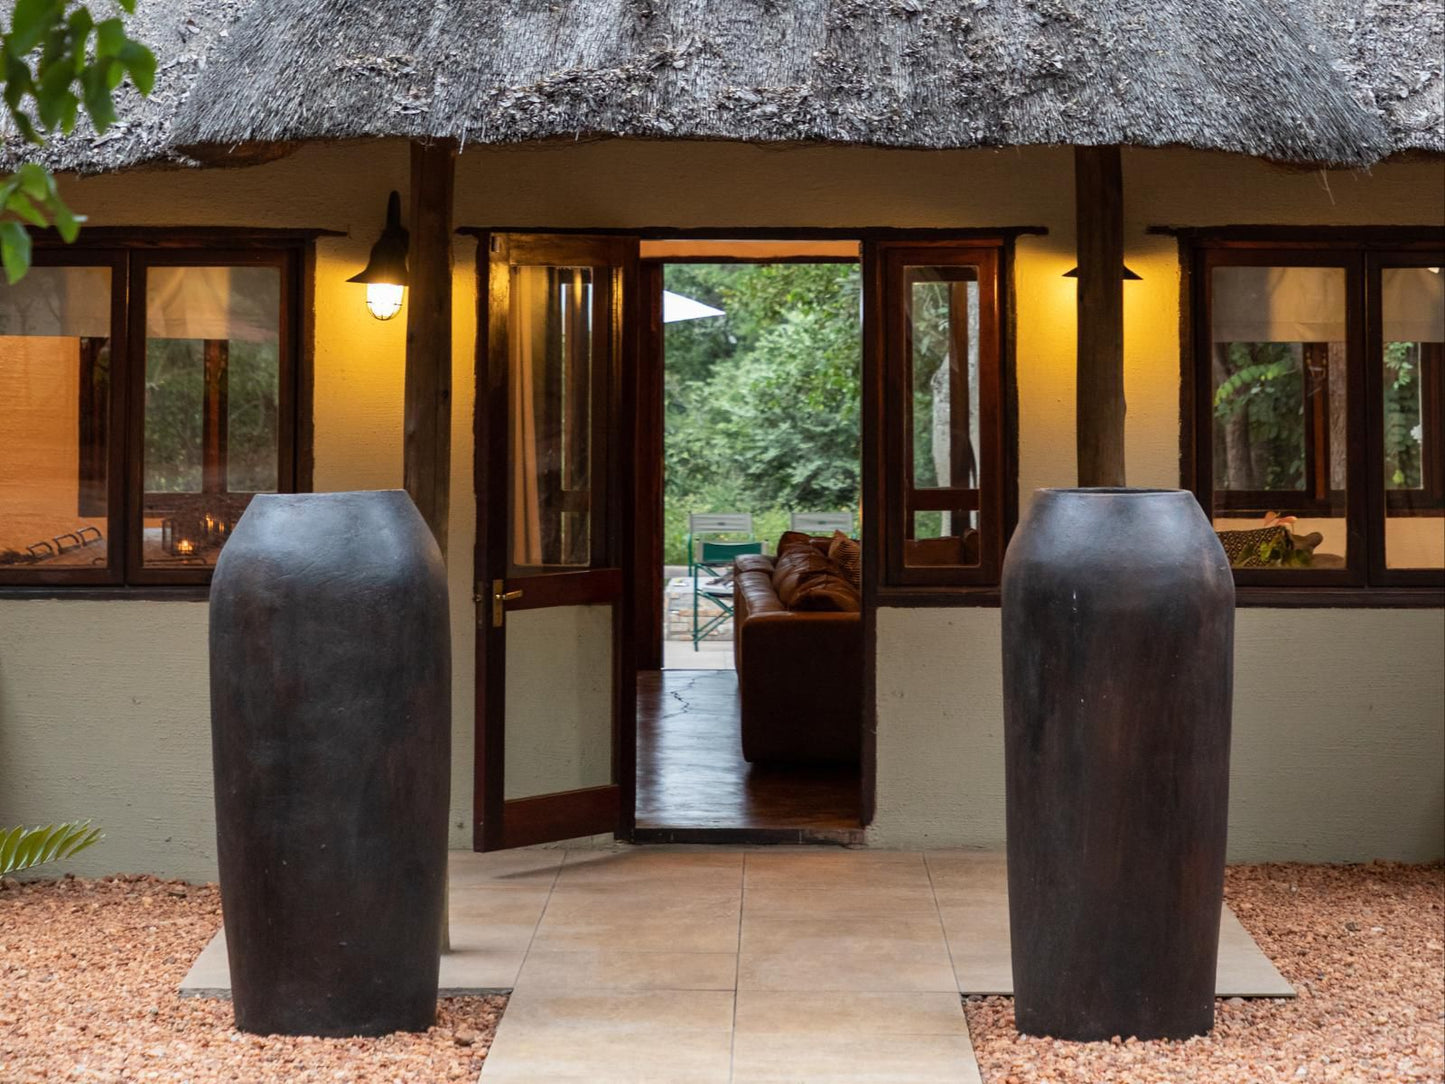 Kingly Bush Villa Phalaborwa Limpopo Province South Africa Stone Texture, Texture